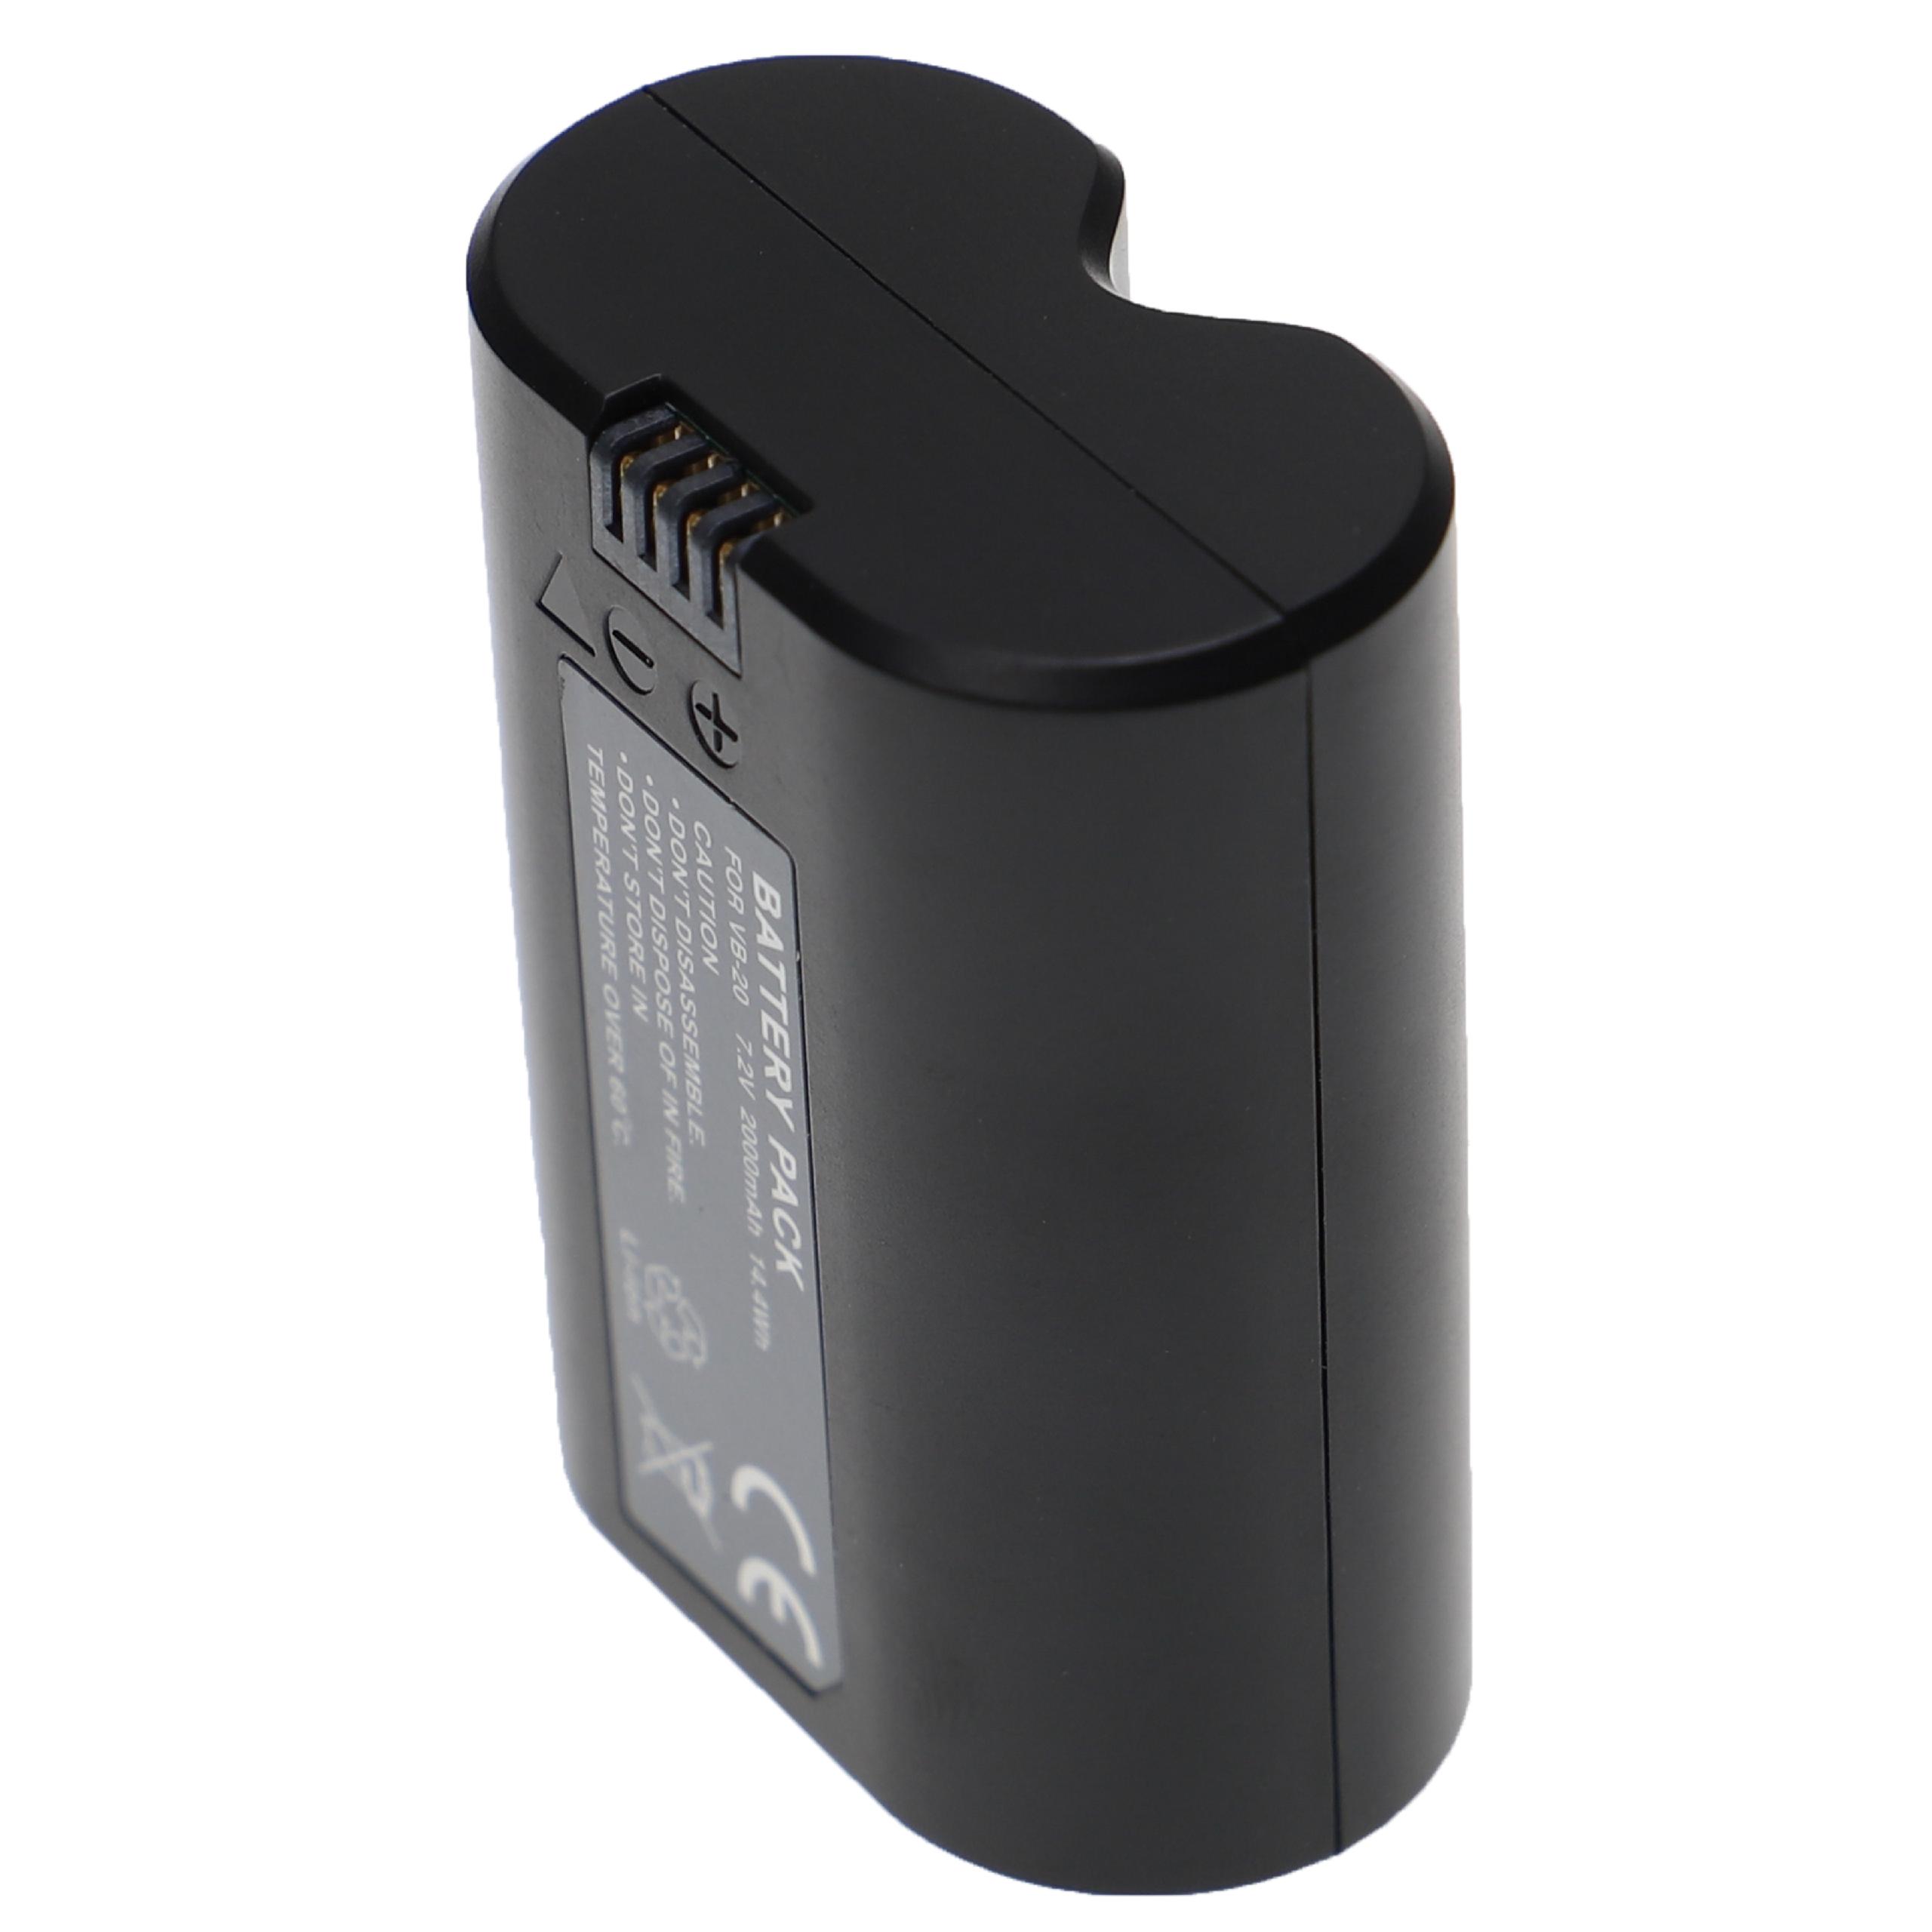 Camera Flash Unit Battery Replacement for Godox VB20 - 2000mAh 7.2V Li-Ion